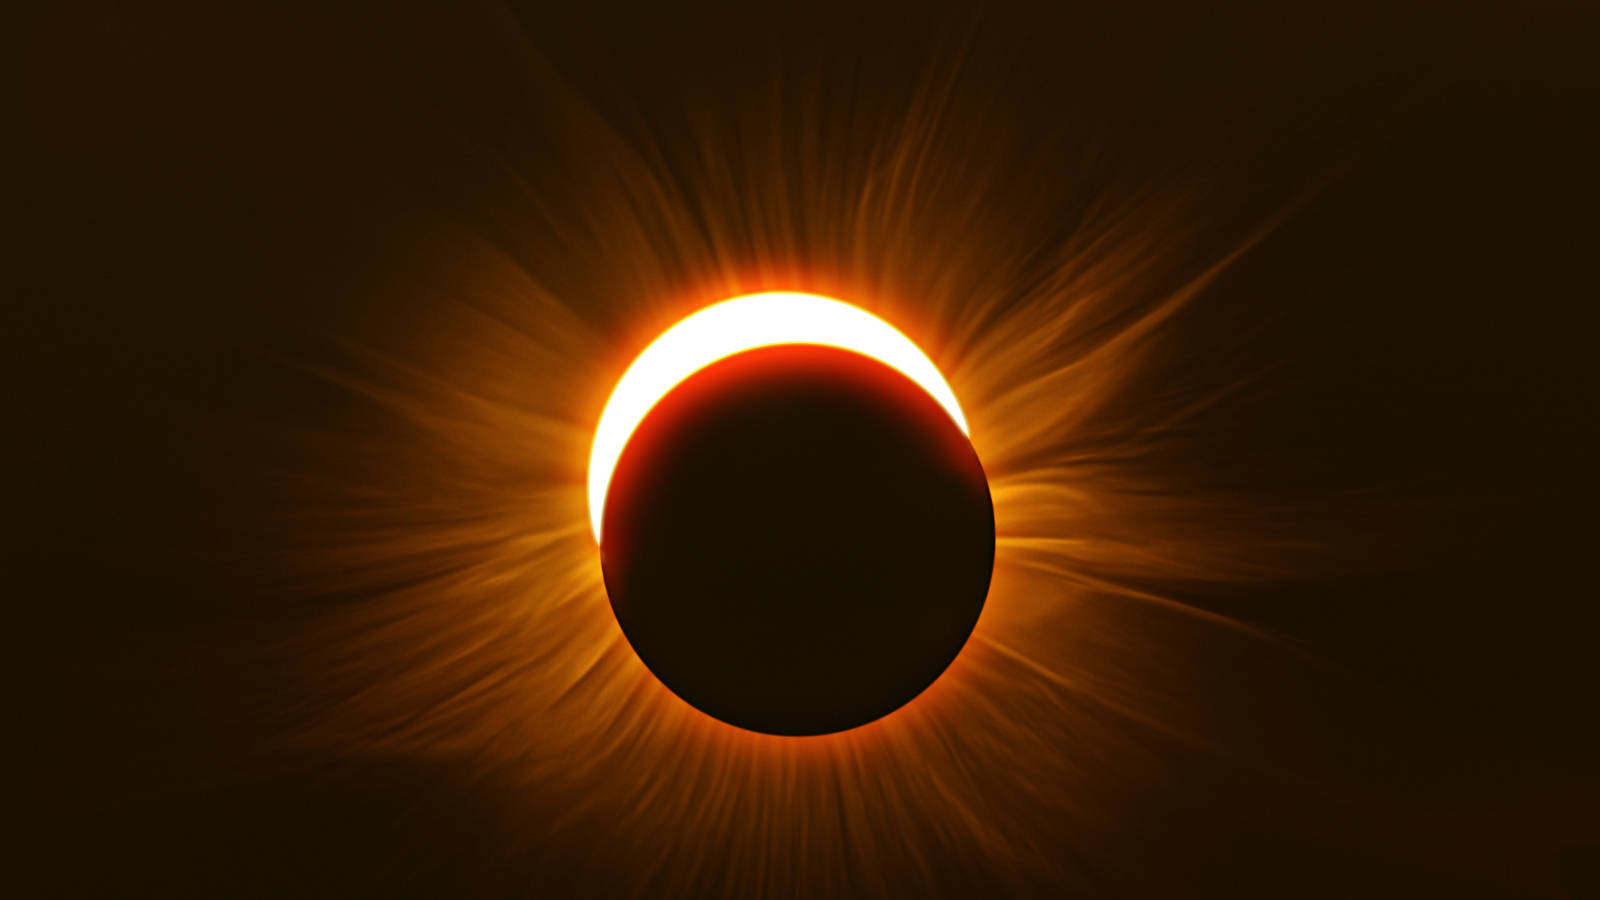 Solar Eclipse Photo Mid-Eclipse Wallpaper